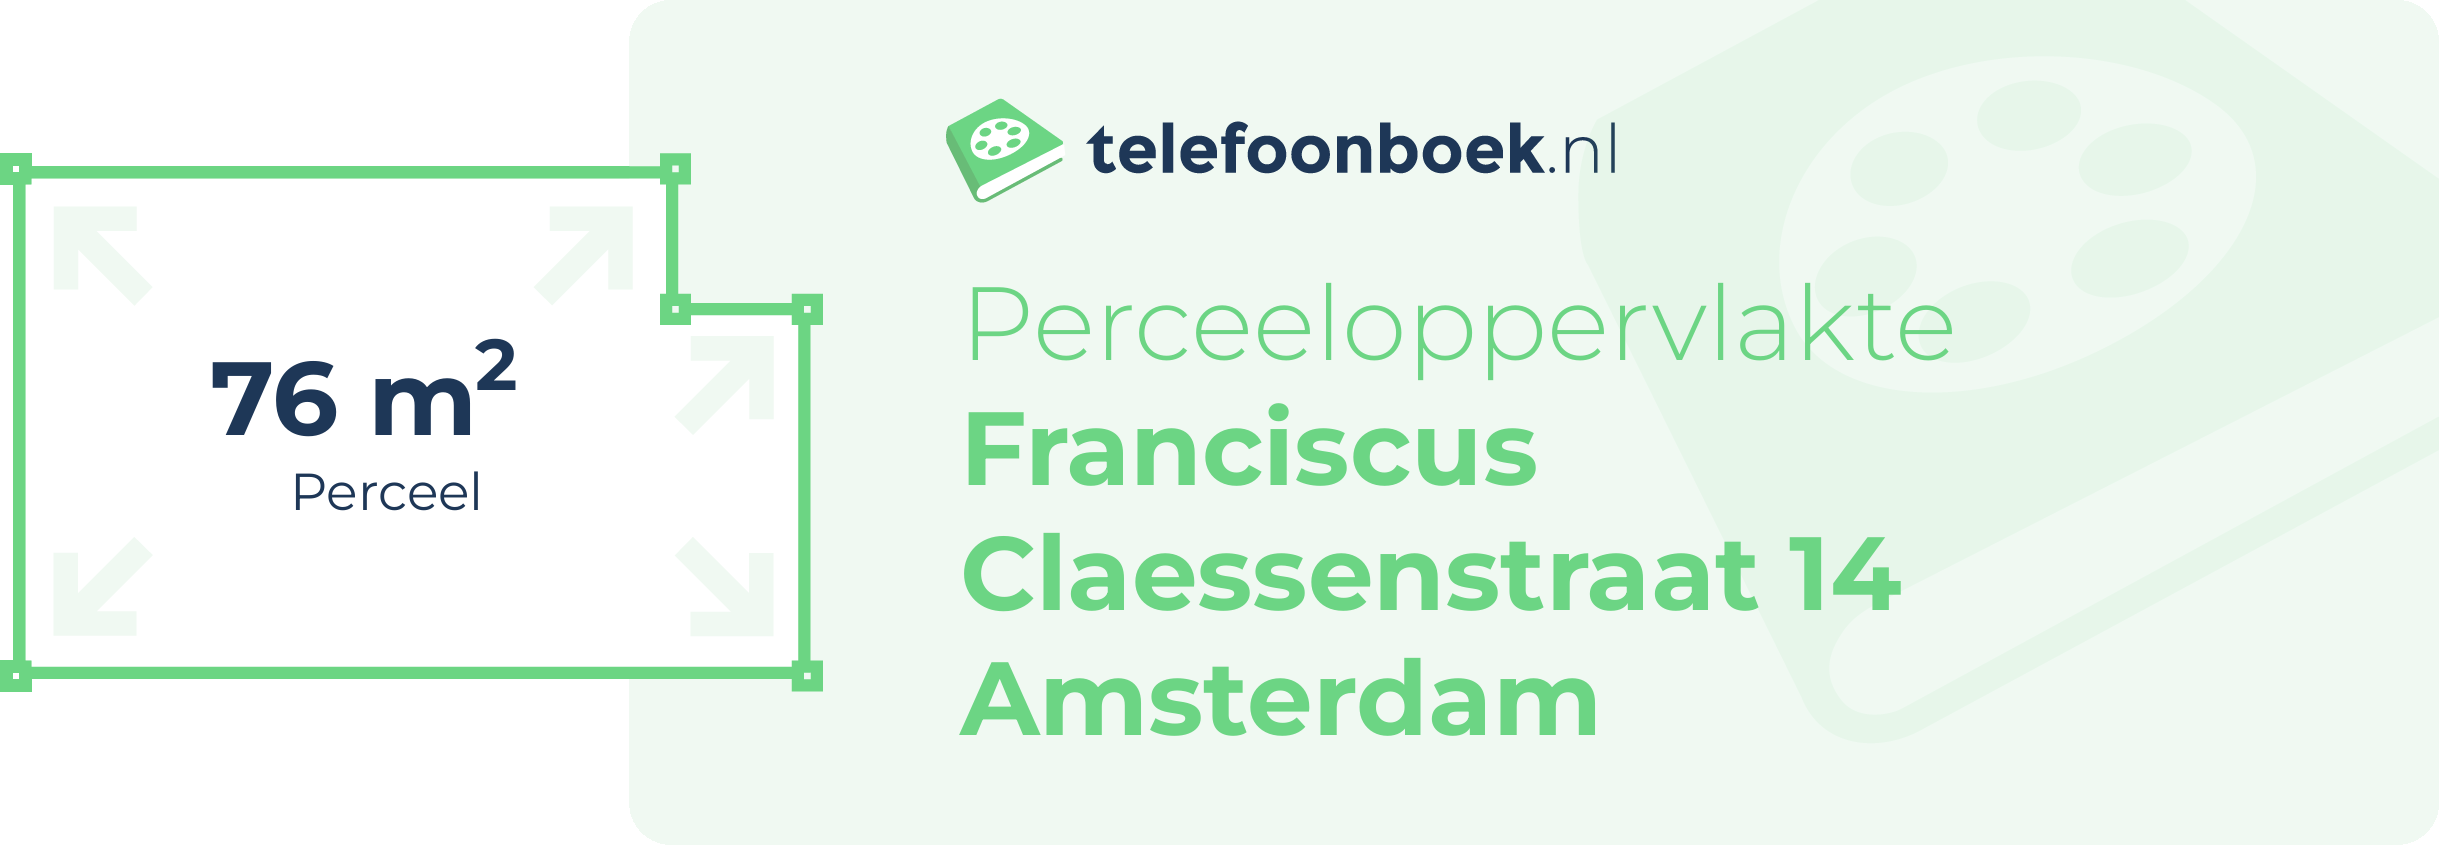 Perceeloppervlakte Franciscus Claessenstraat 14 Amsterdam